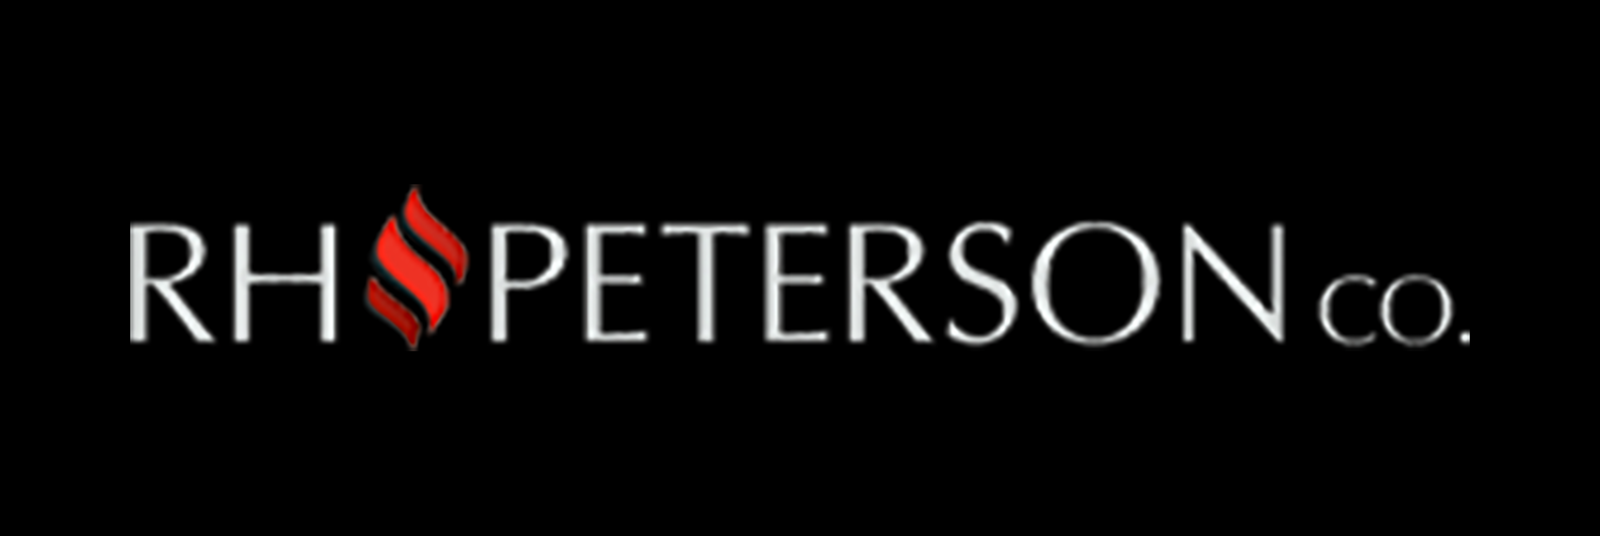 rhpeterson-logo-black